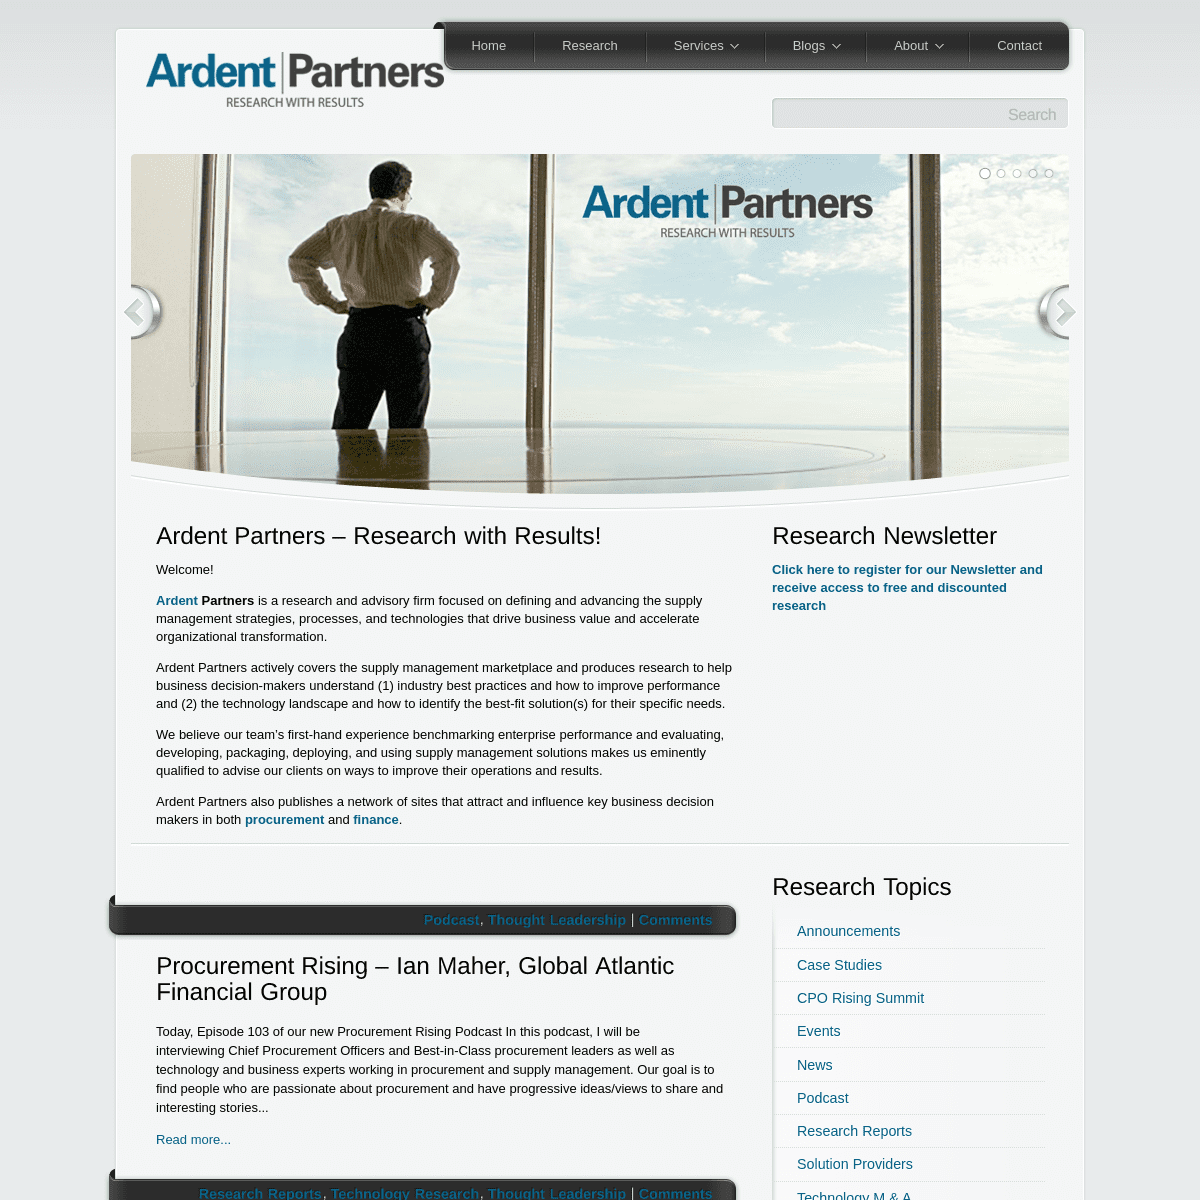 A complete backup of https://ardentpartners.com